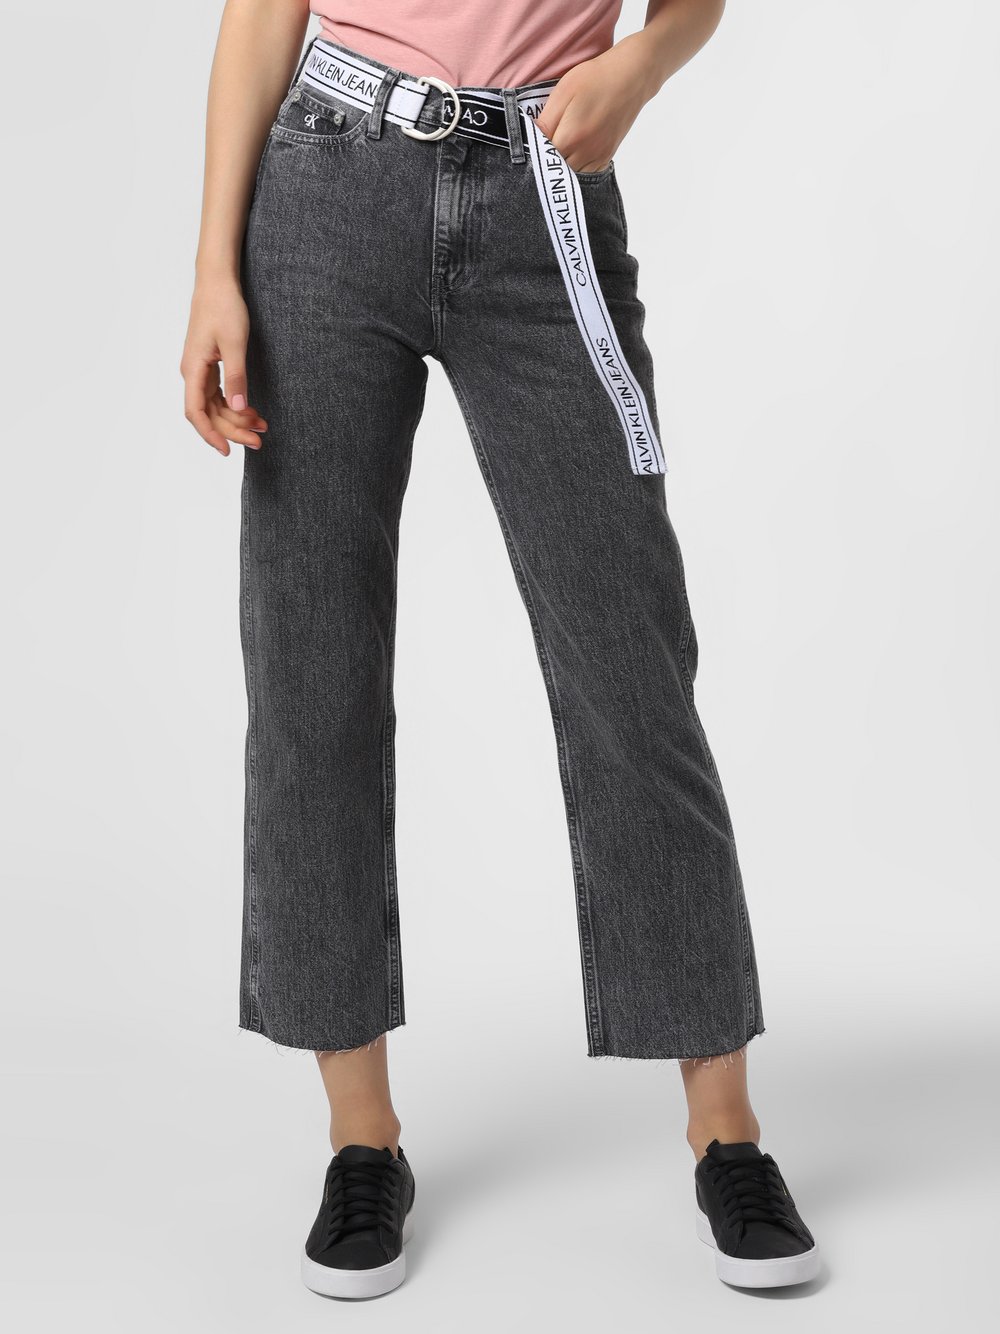 Calvin Klein Jeans - Jeansy damskie, szary